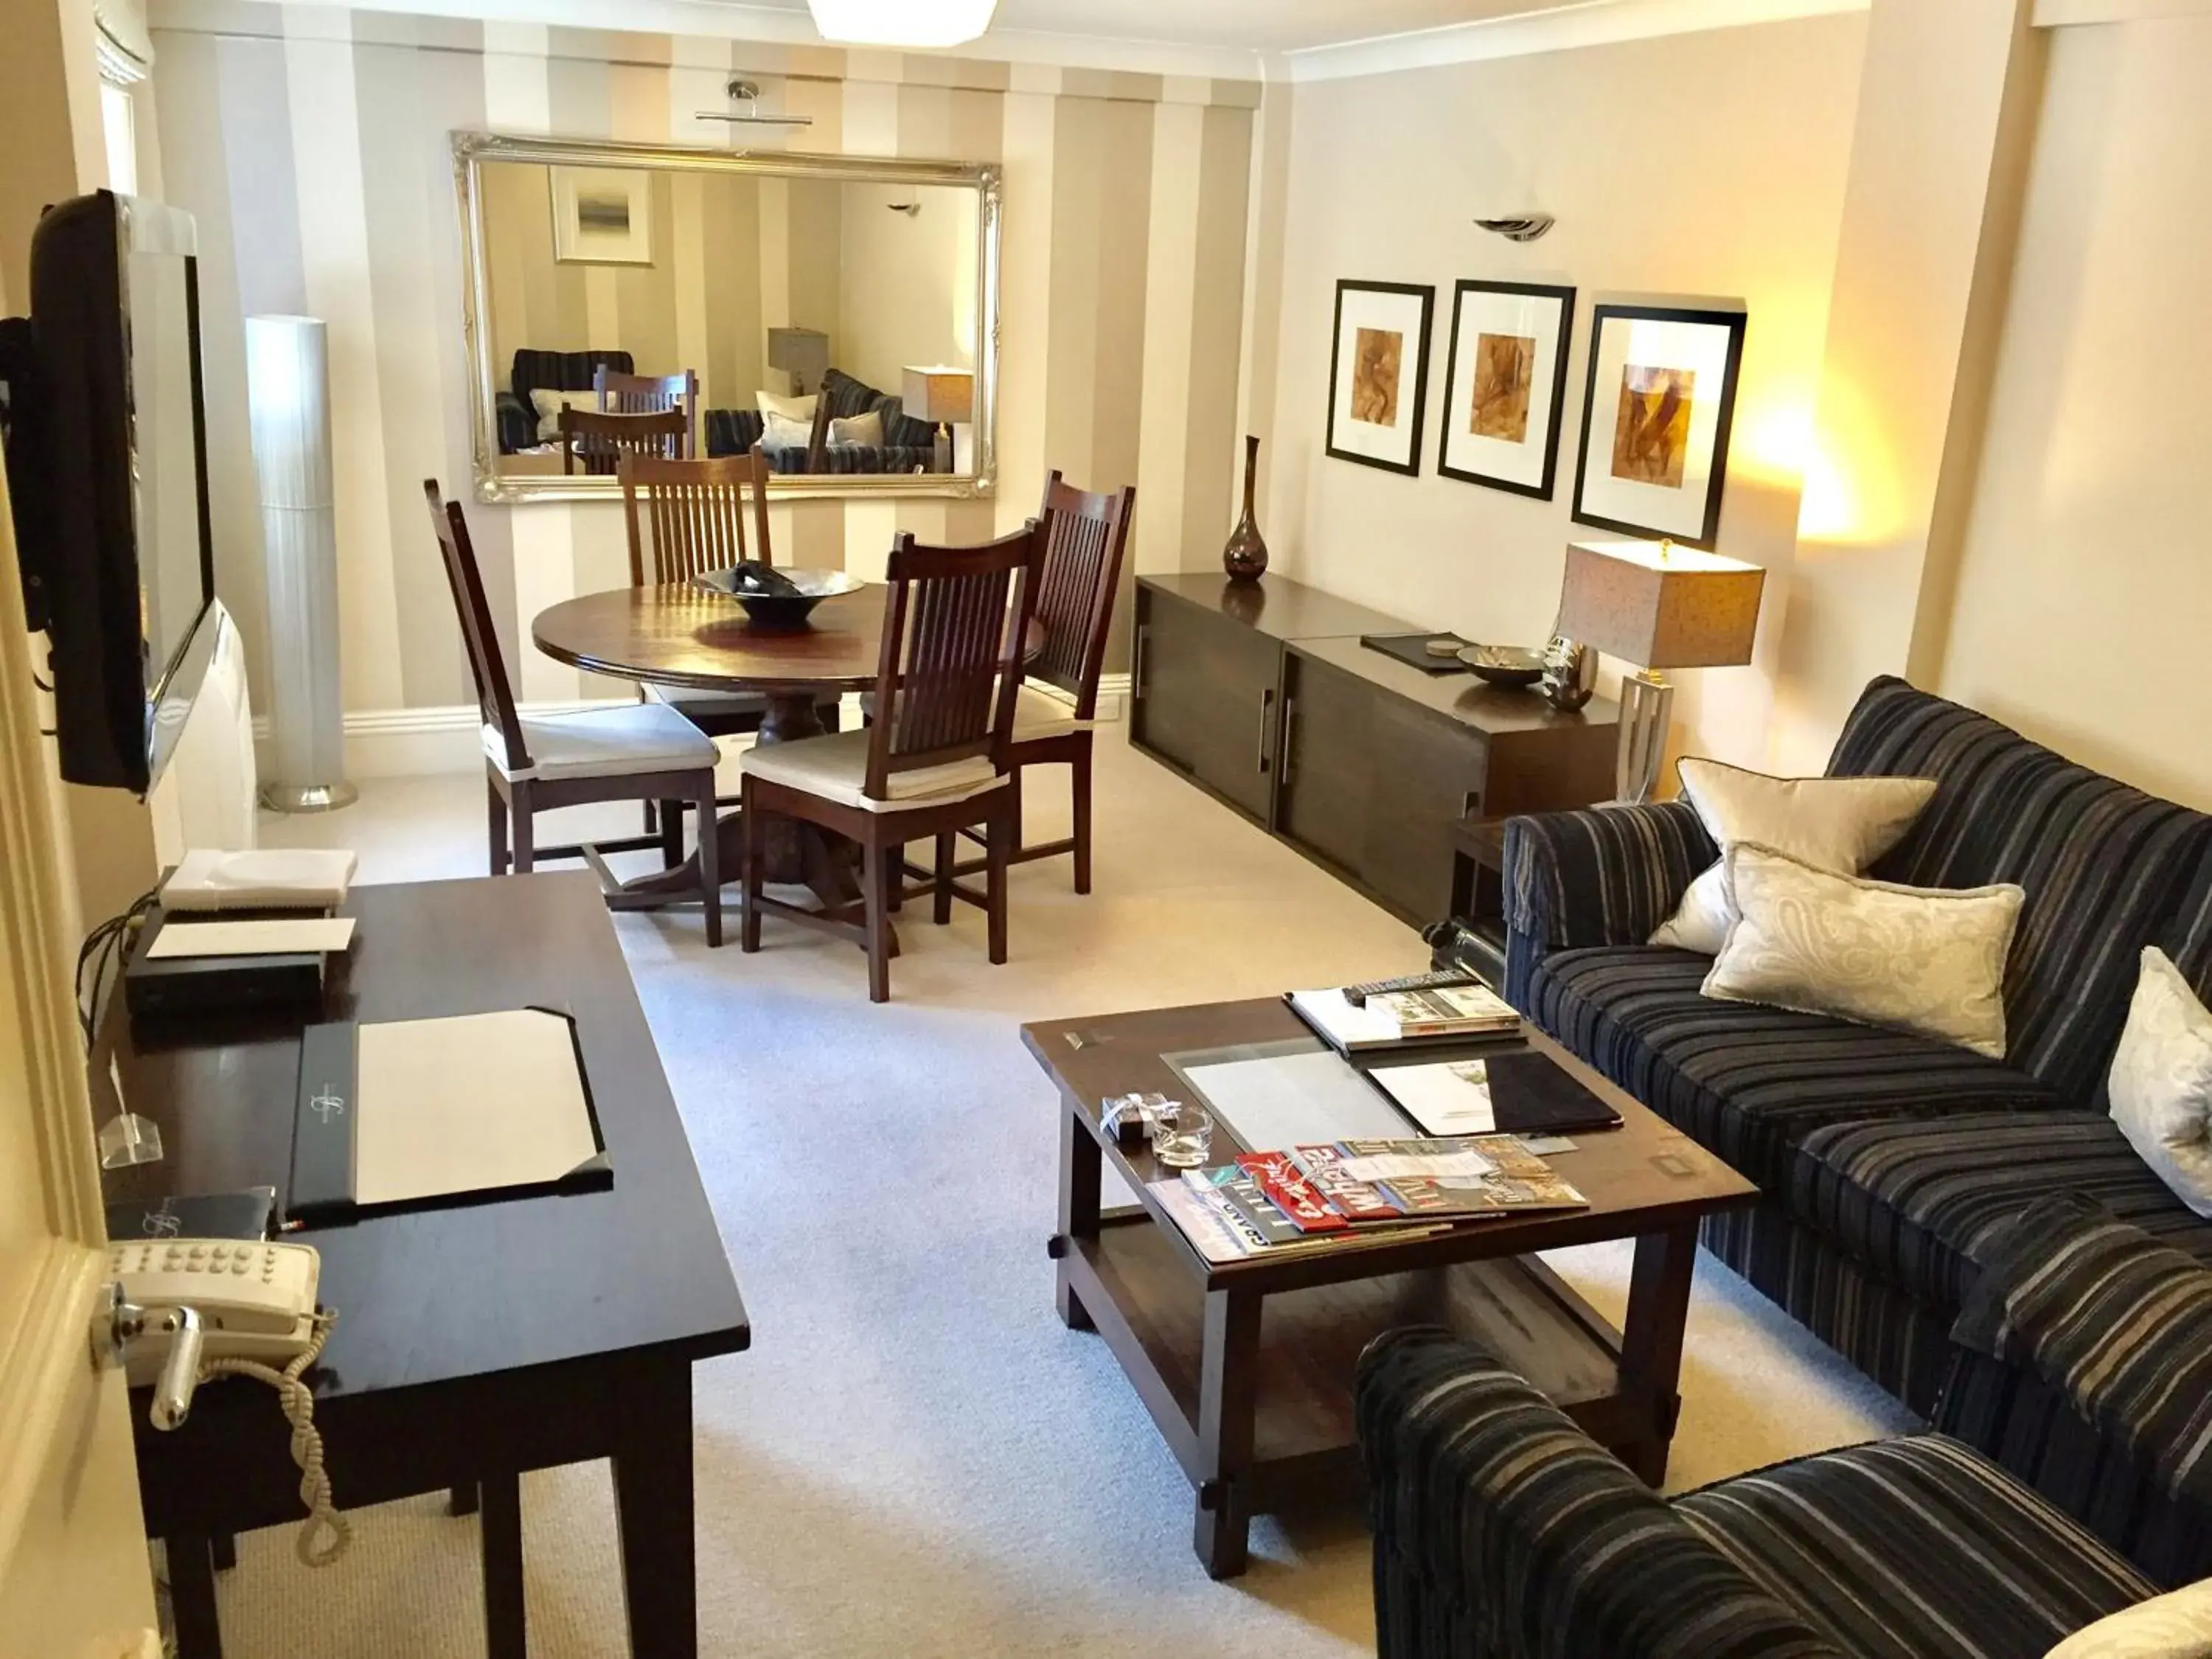 Standard One-Bedroom Apartment in Beaufort House - Knightsbridge